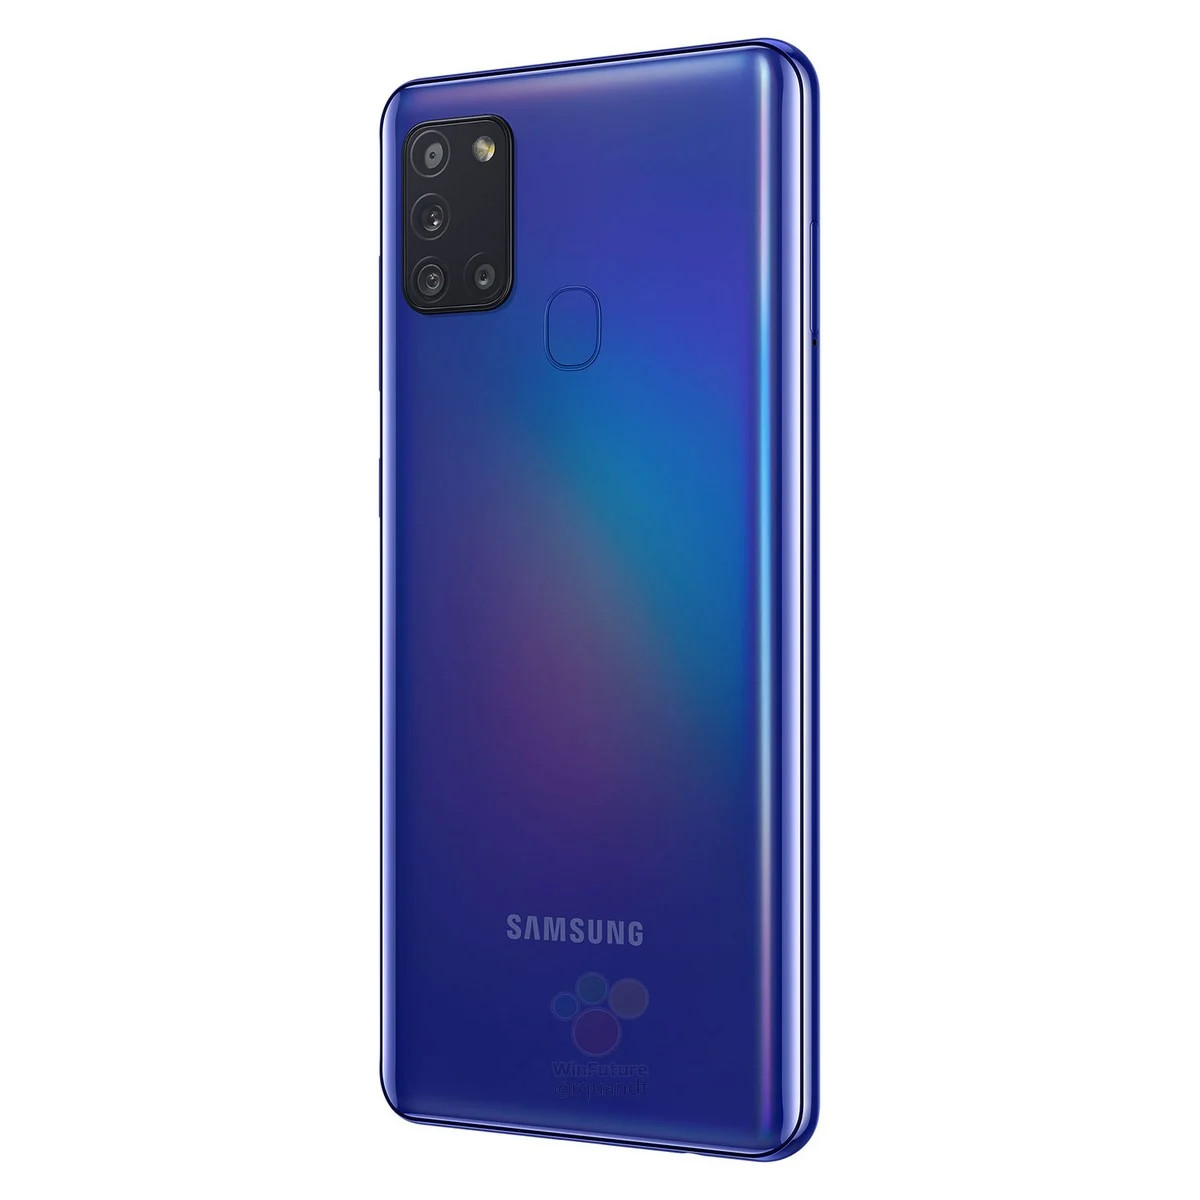 Samsung-Galaxy-A21s-1589366142-0-0.jpg